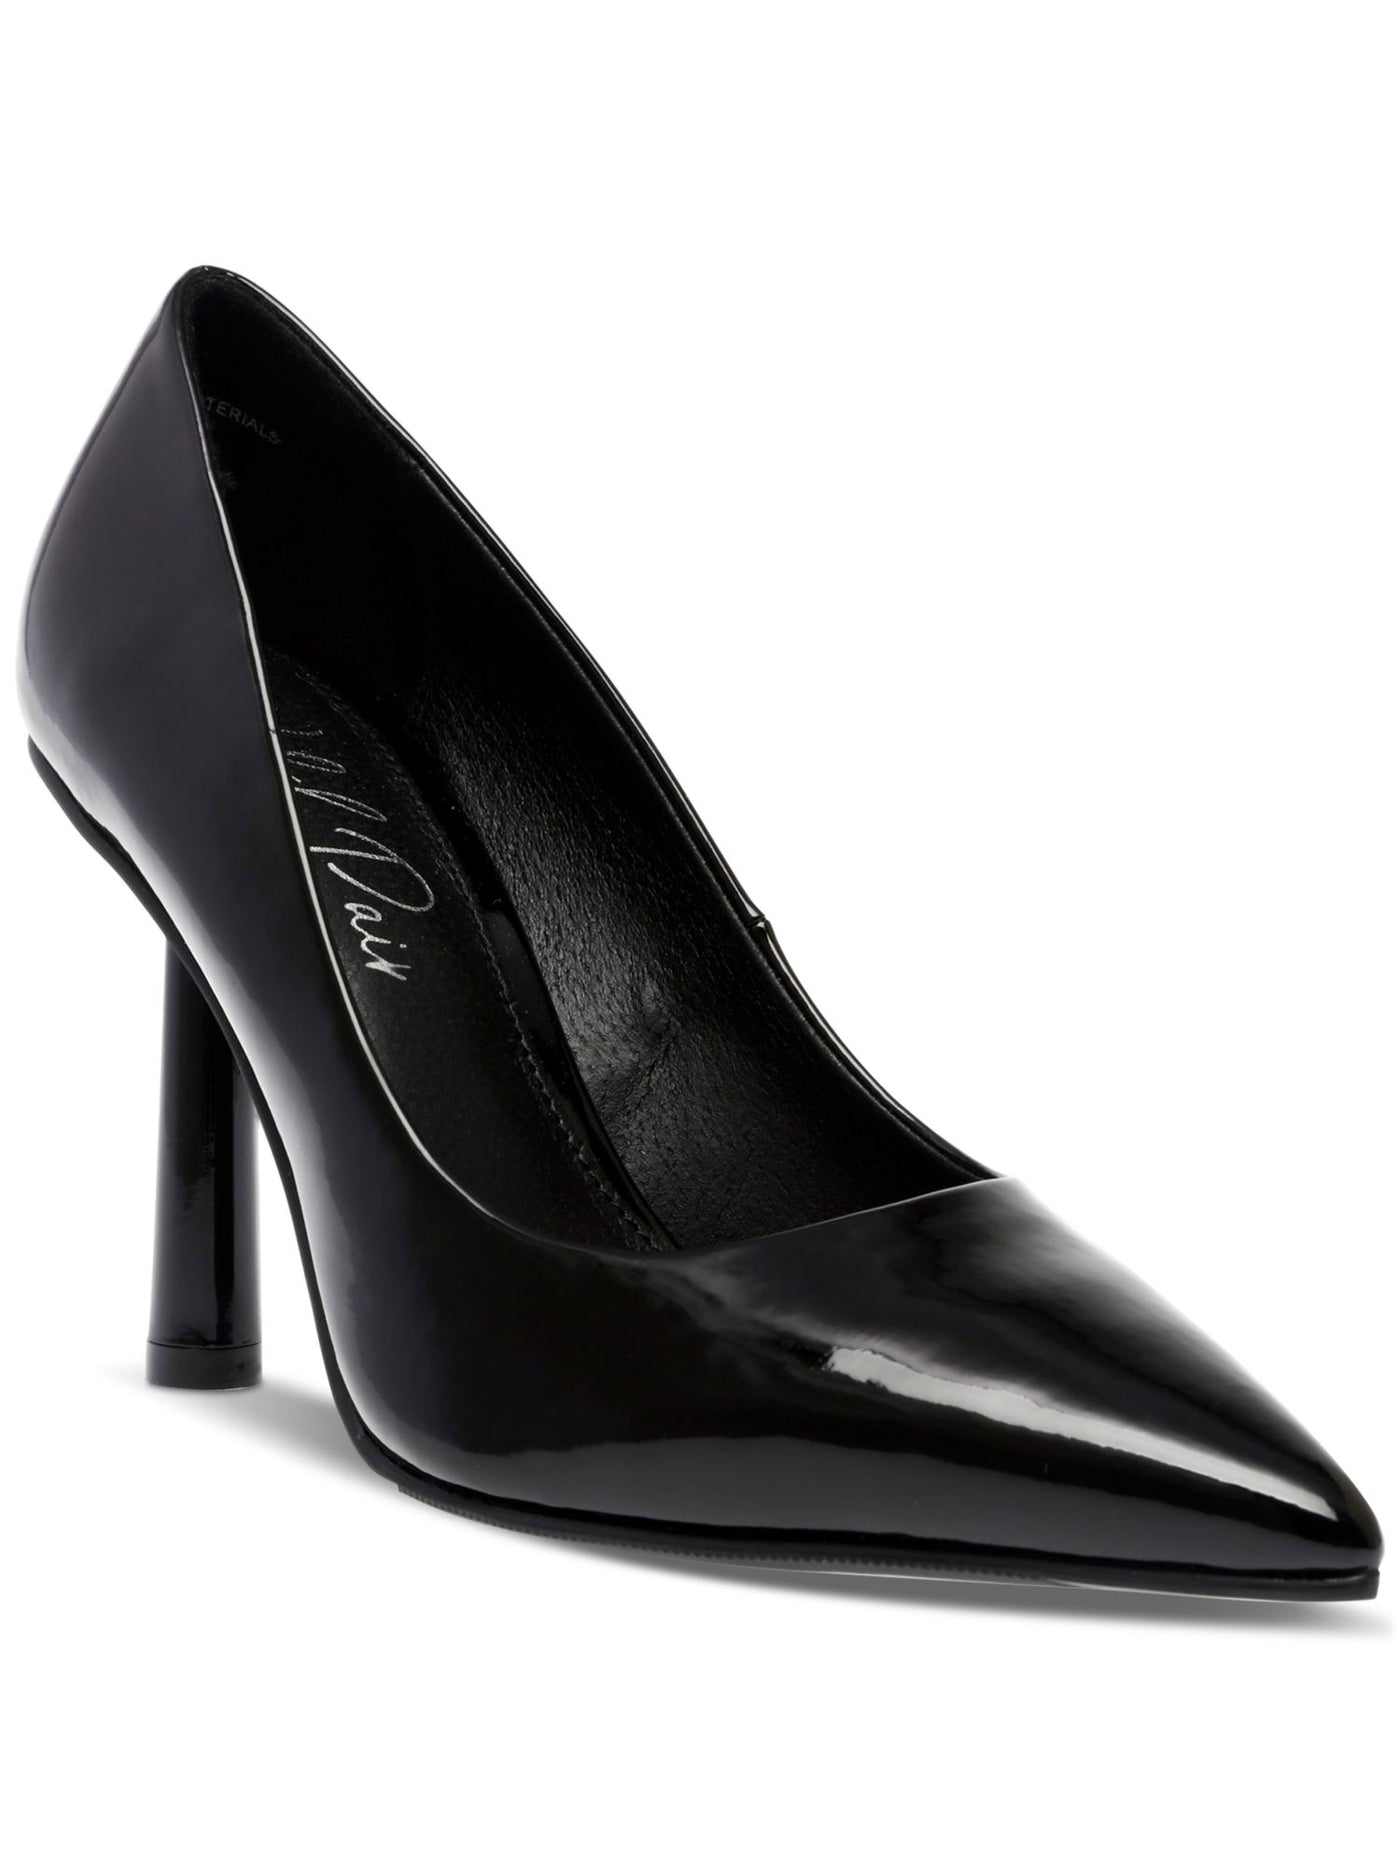 WILD PAIR Womens Black Slip Resistant Comfort Taraa Pointed Toe Stiletto Slip On Pumps Shoes 6.5 M